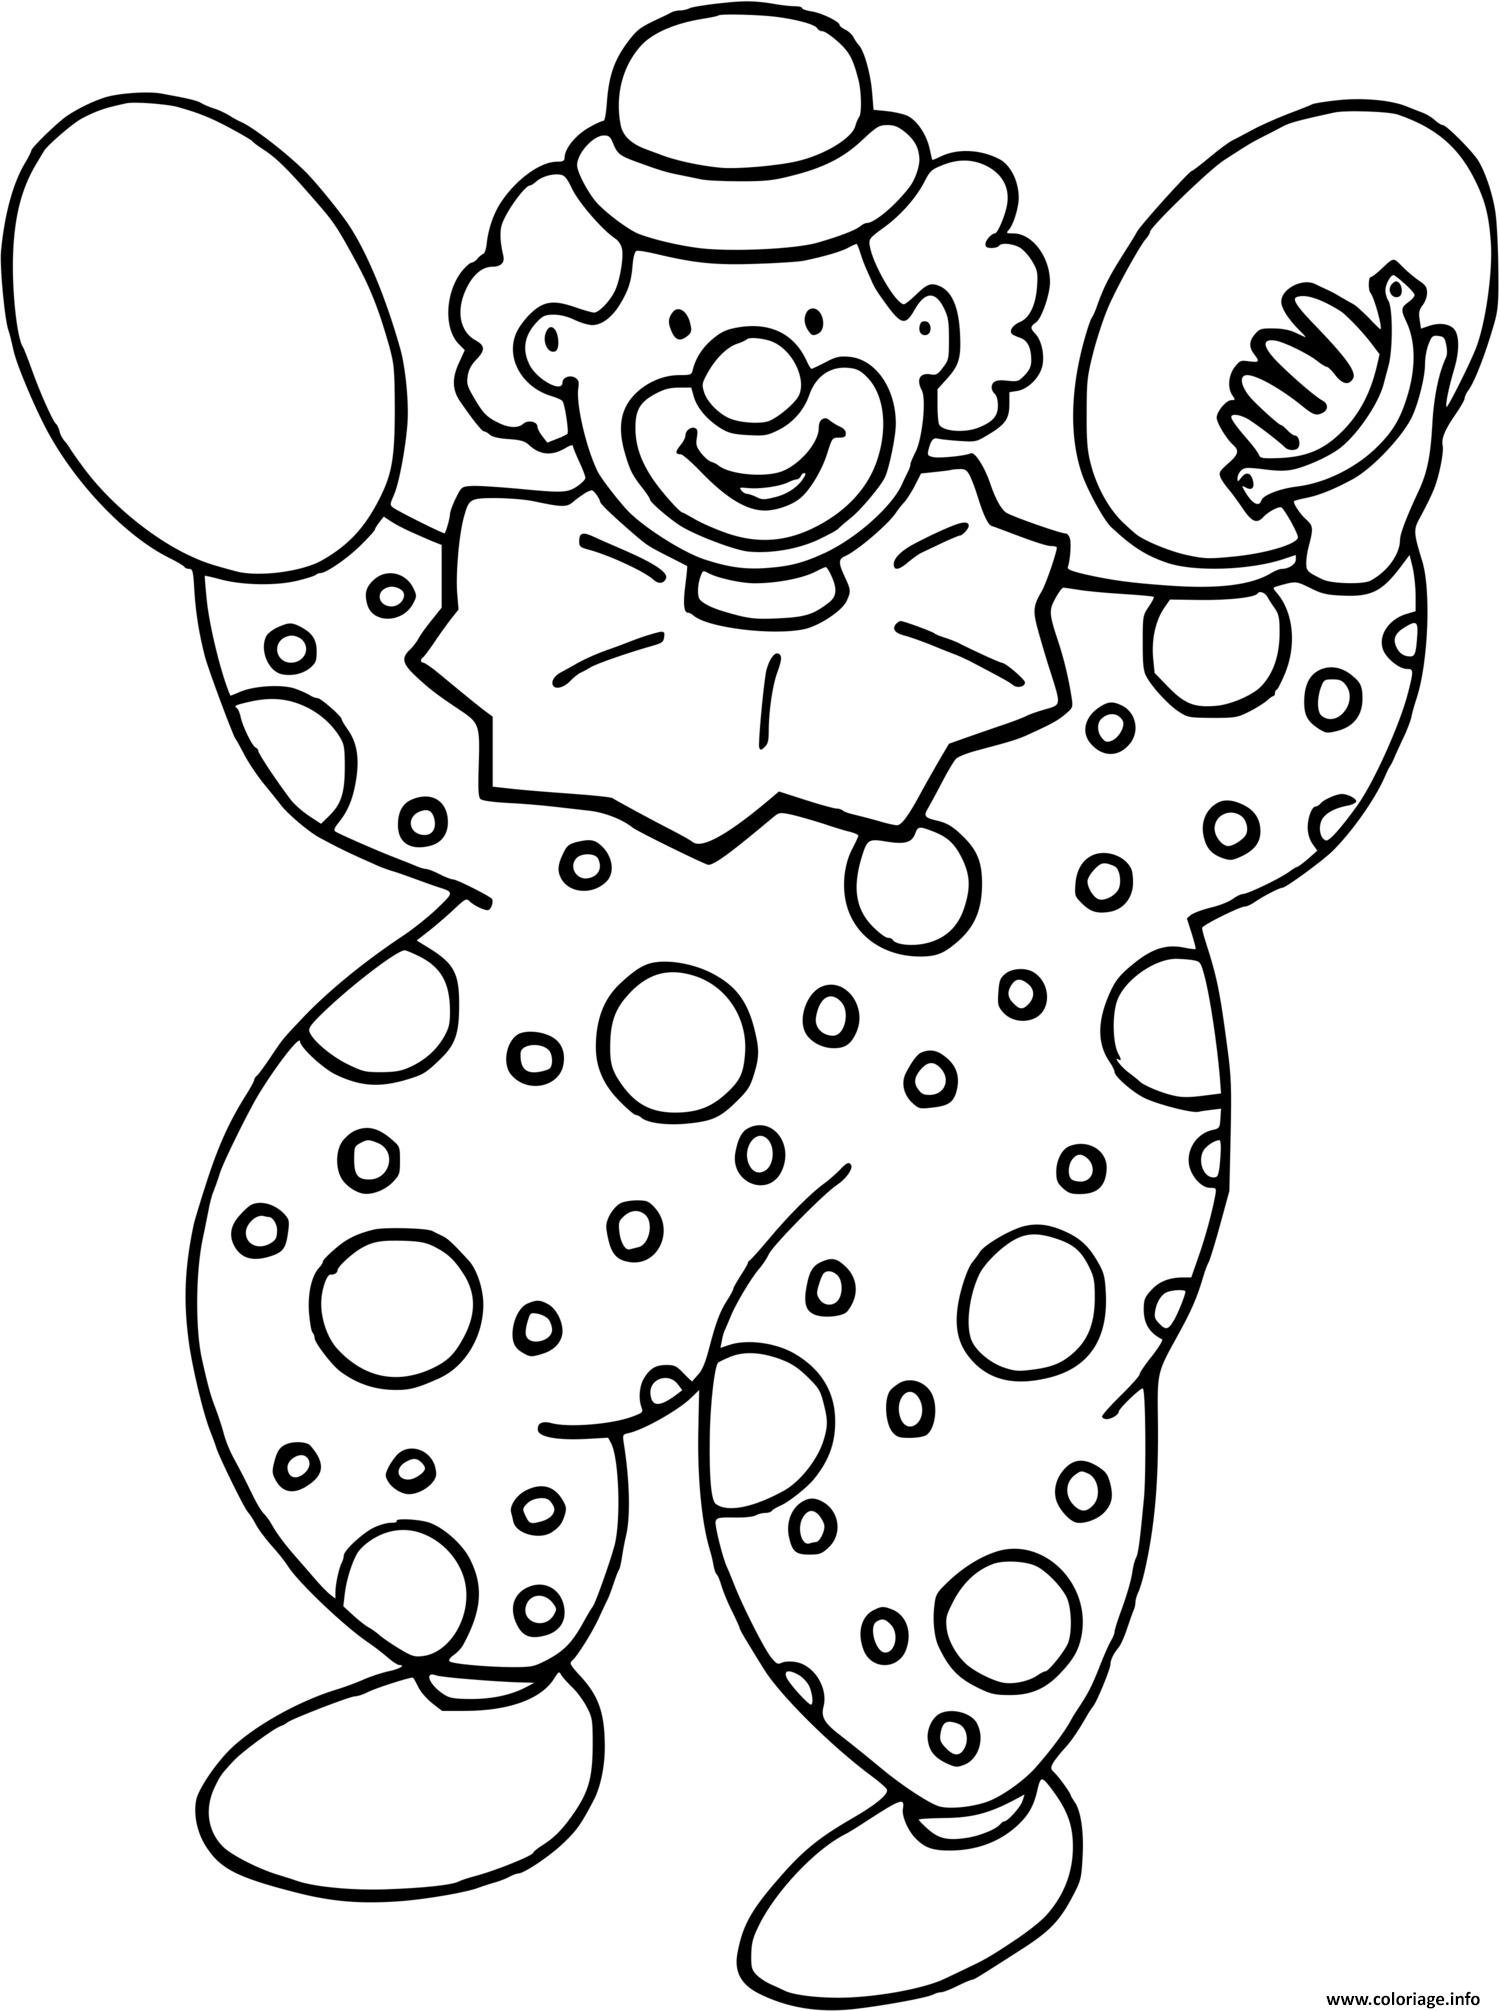 Клоун раскраска для детей 4 5. Клоун раскраска. Клоун раскраска для детей. Раскраска весёлый клоун для детей. Клоун контур.